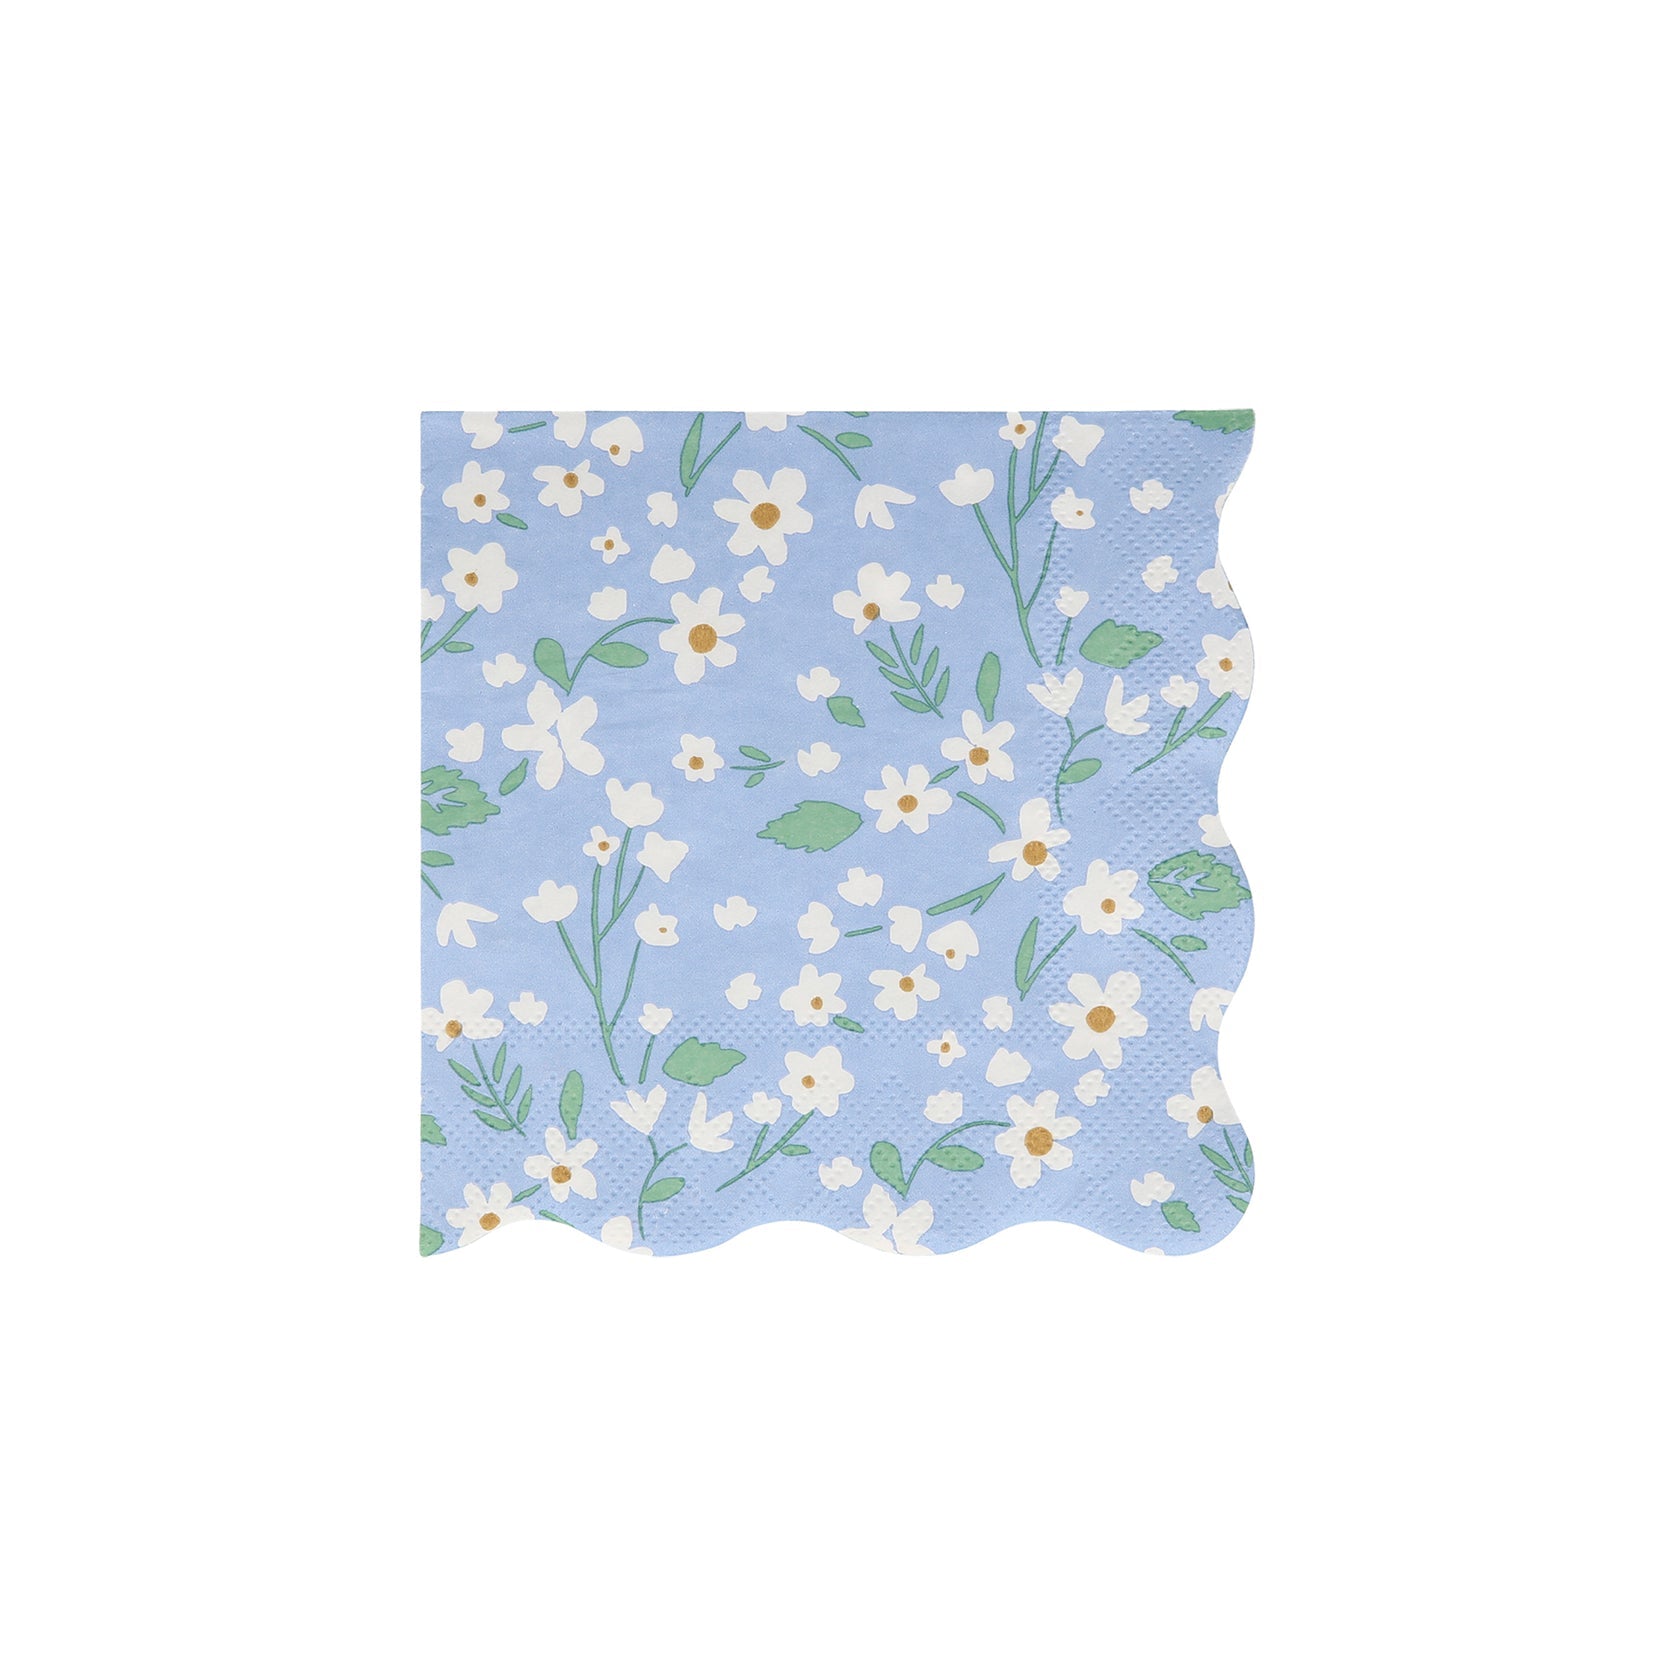 A blue Ditsy Floral napkin from Meri Meri.